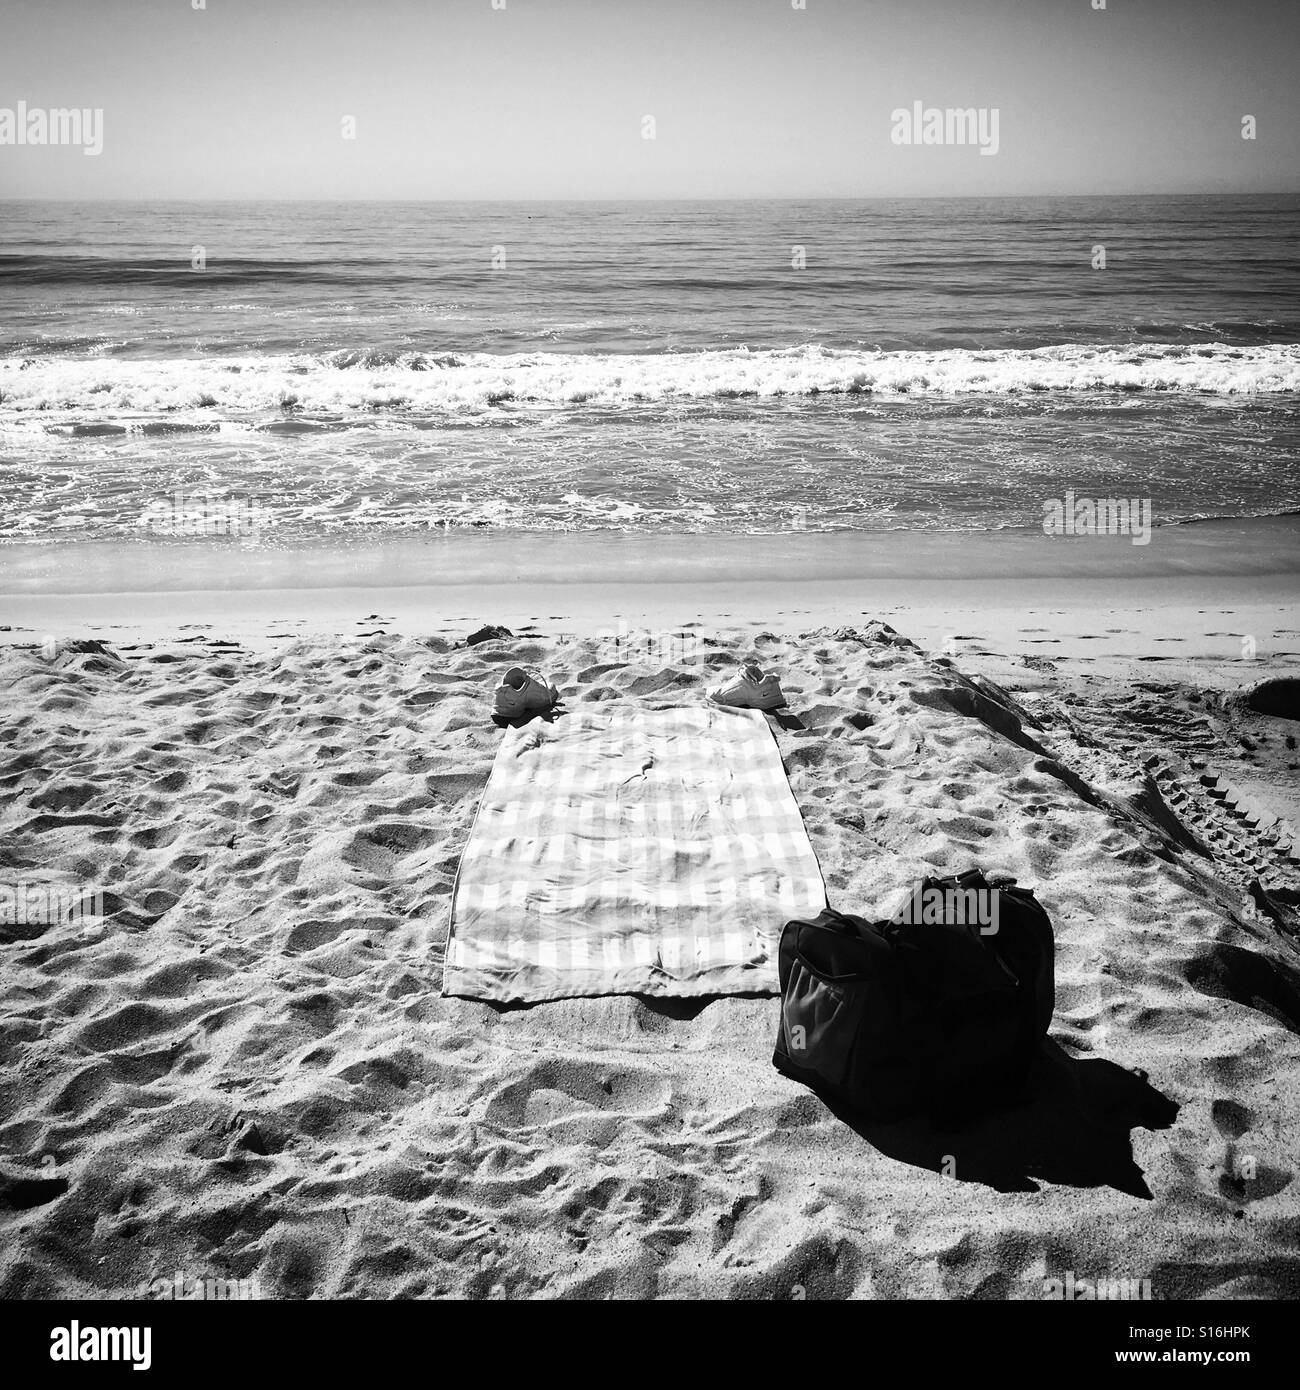 B&W beach scene with towel on sand Stock Photo